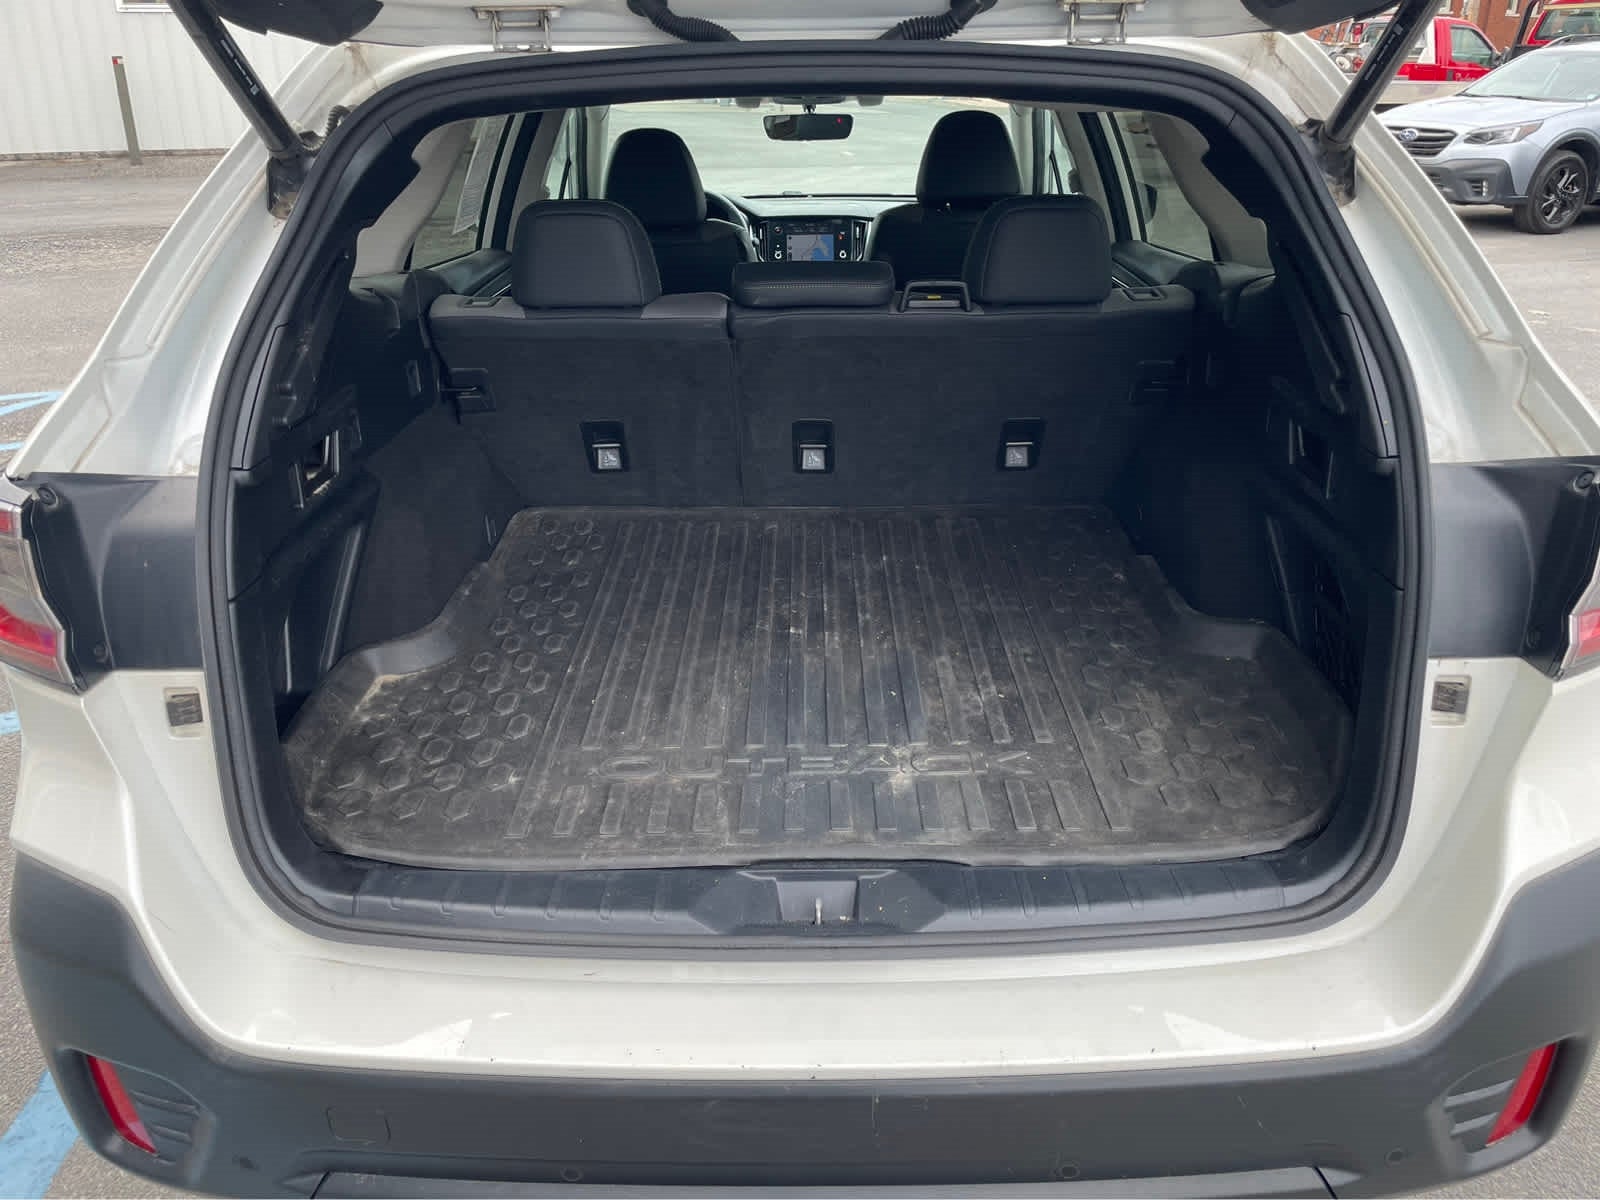 2020 Subaru Outback Onyx Edition XT CVT